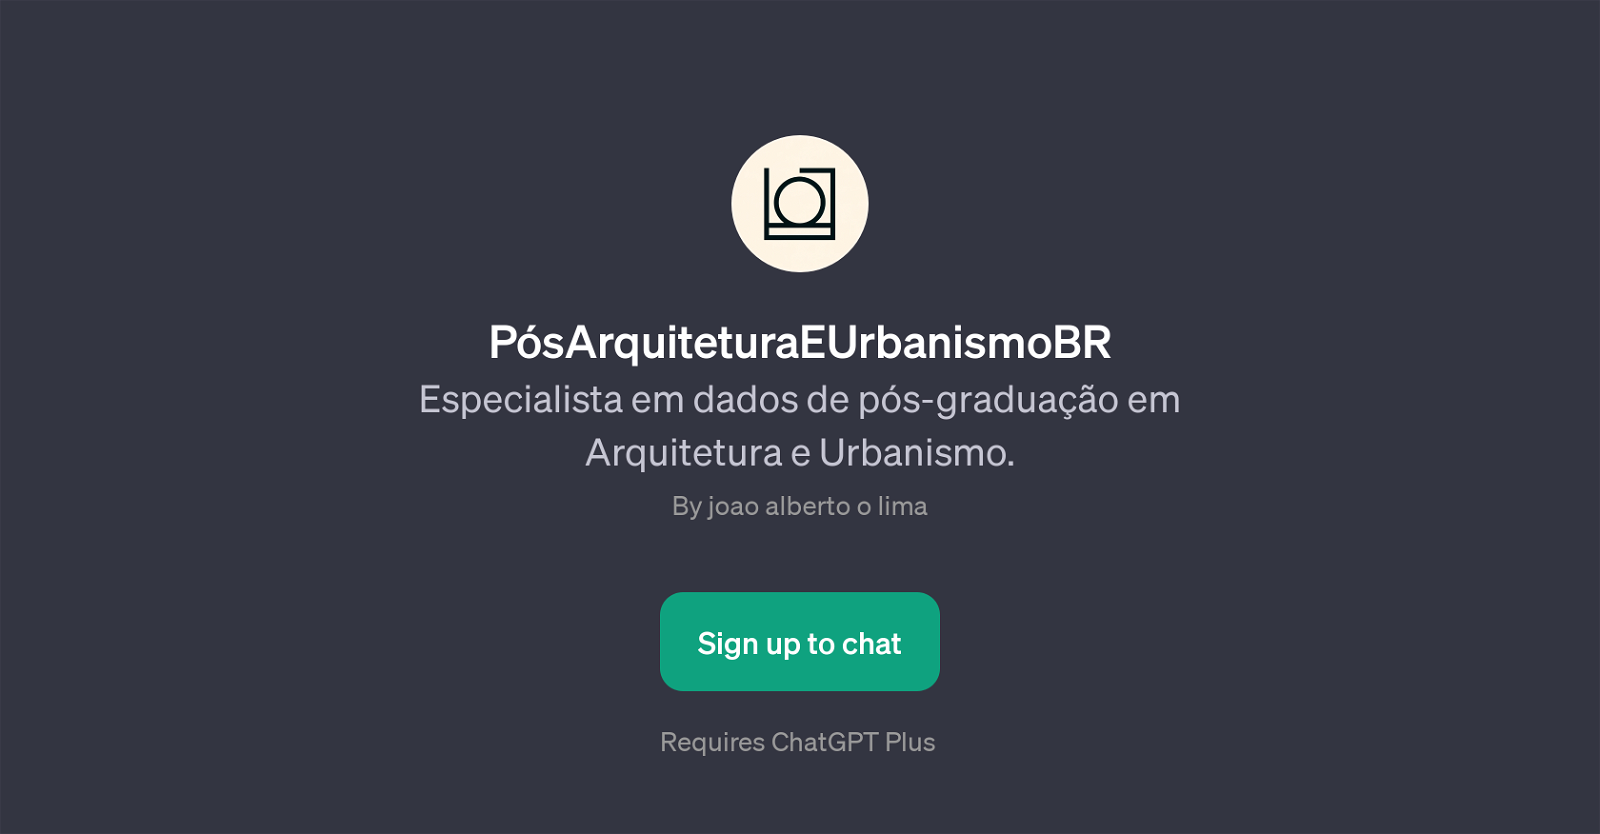 PsArquiteturaEUrbanismoBR website